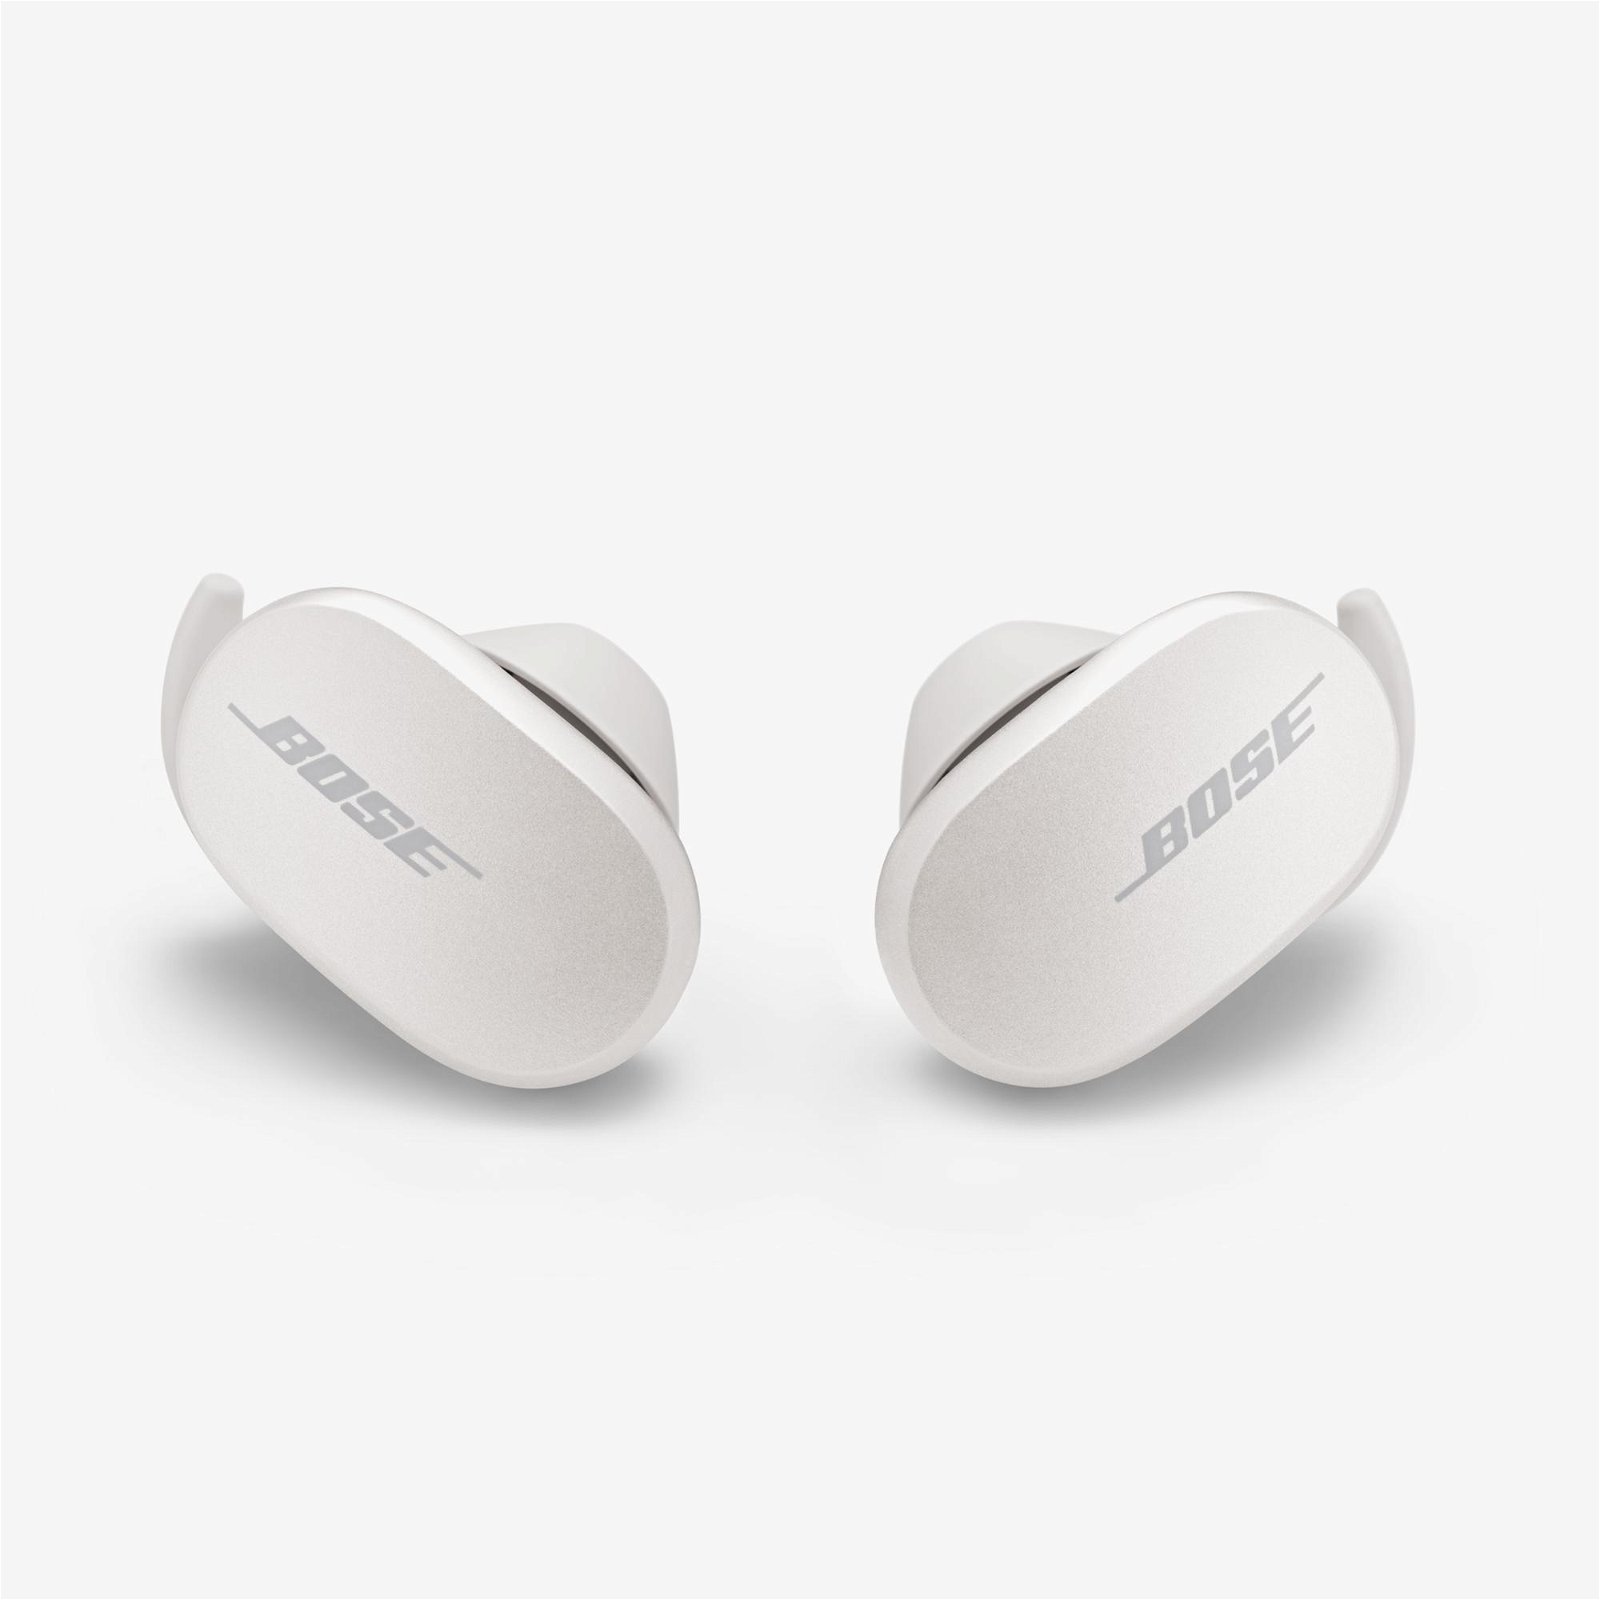 Bose QuietComfort Earbuds Beyaz Kulaklık